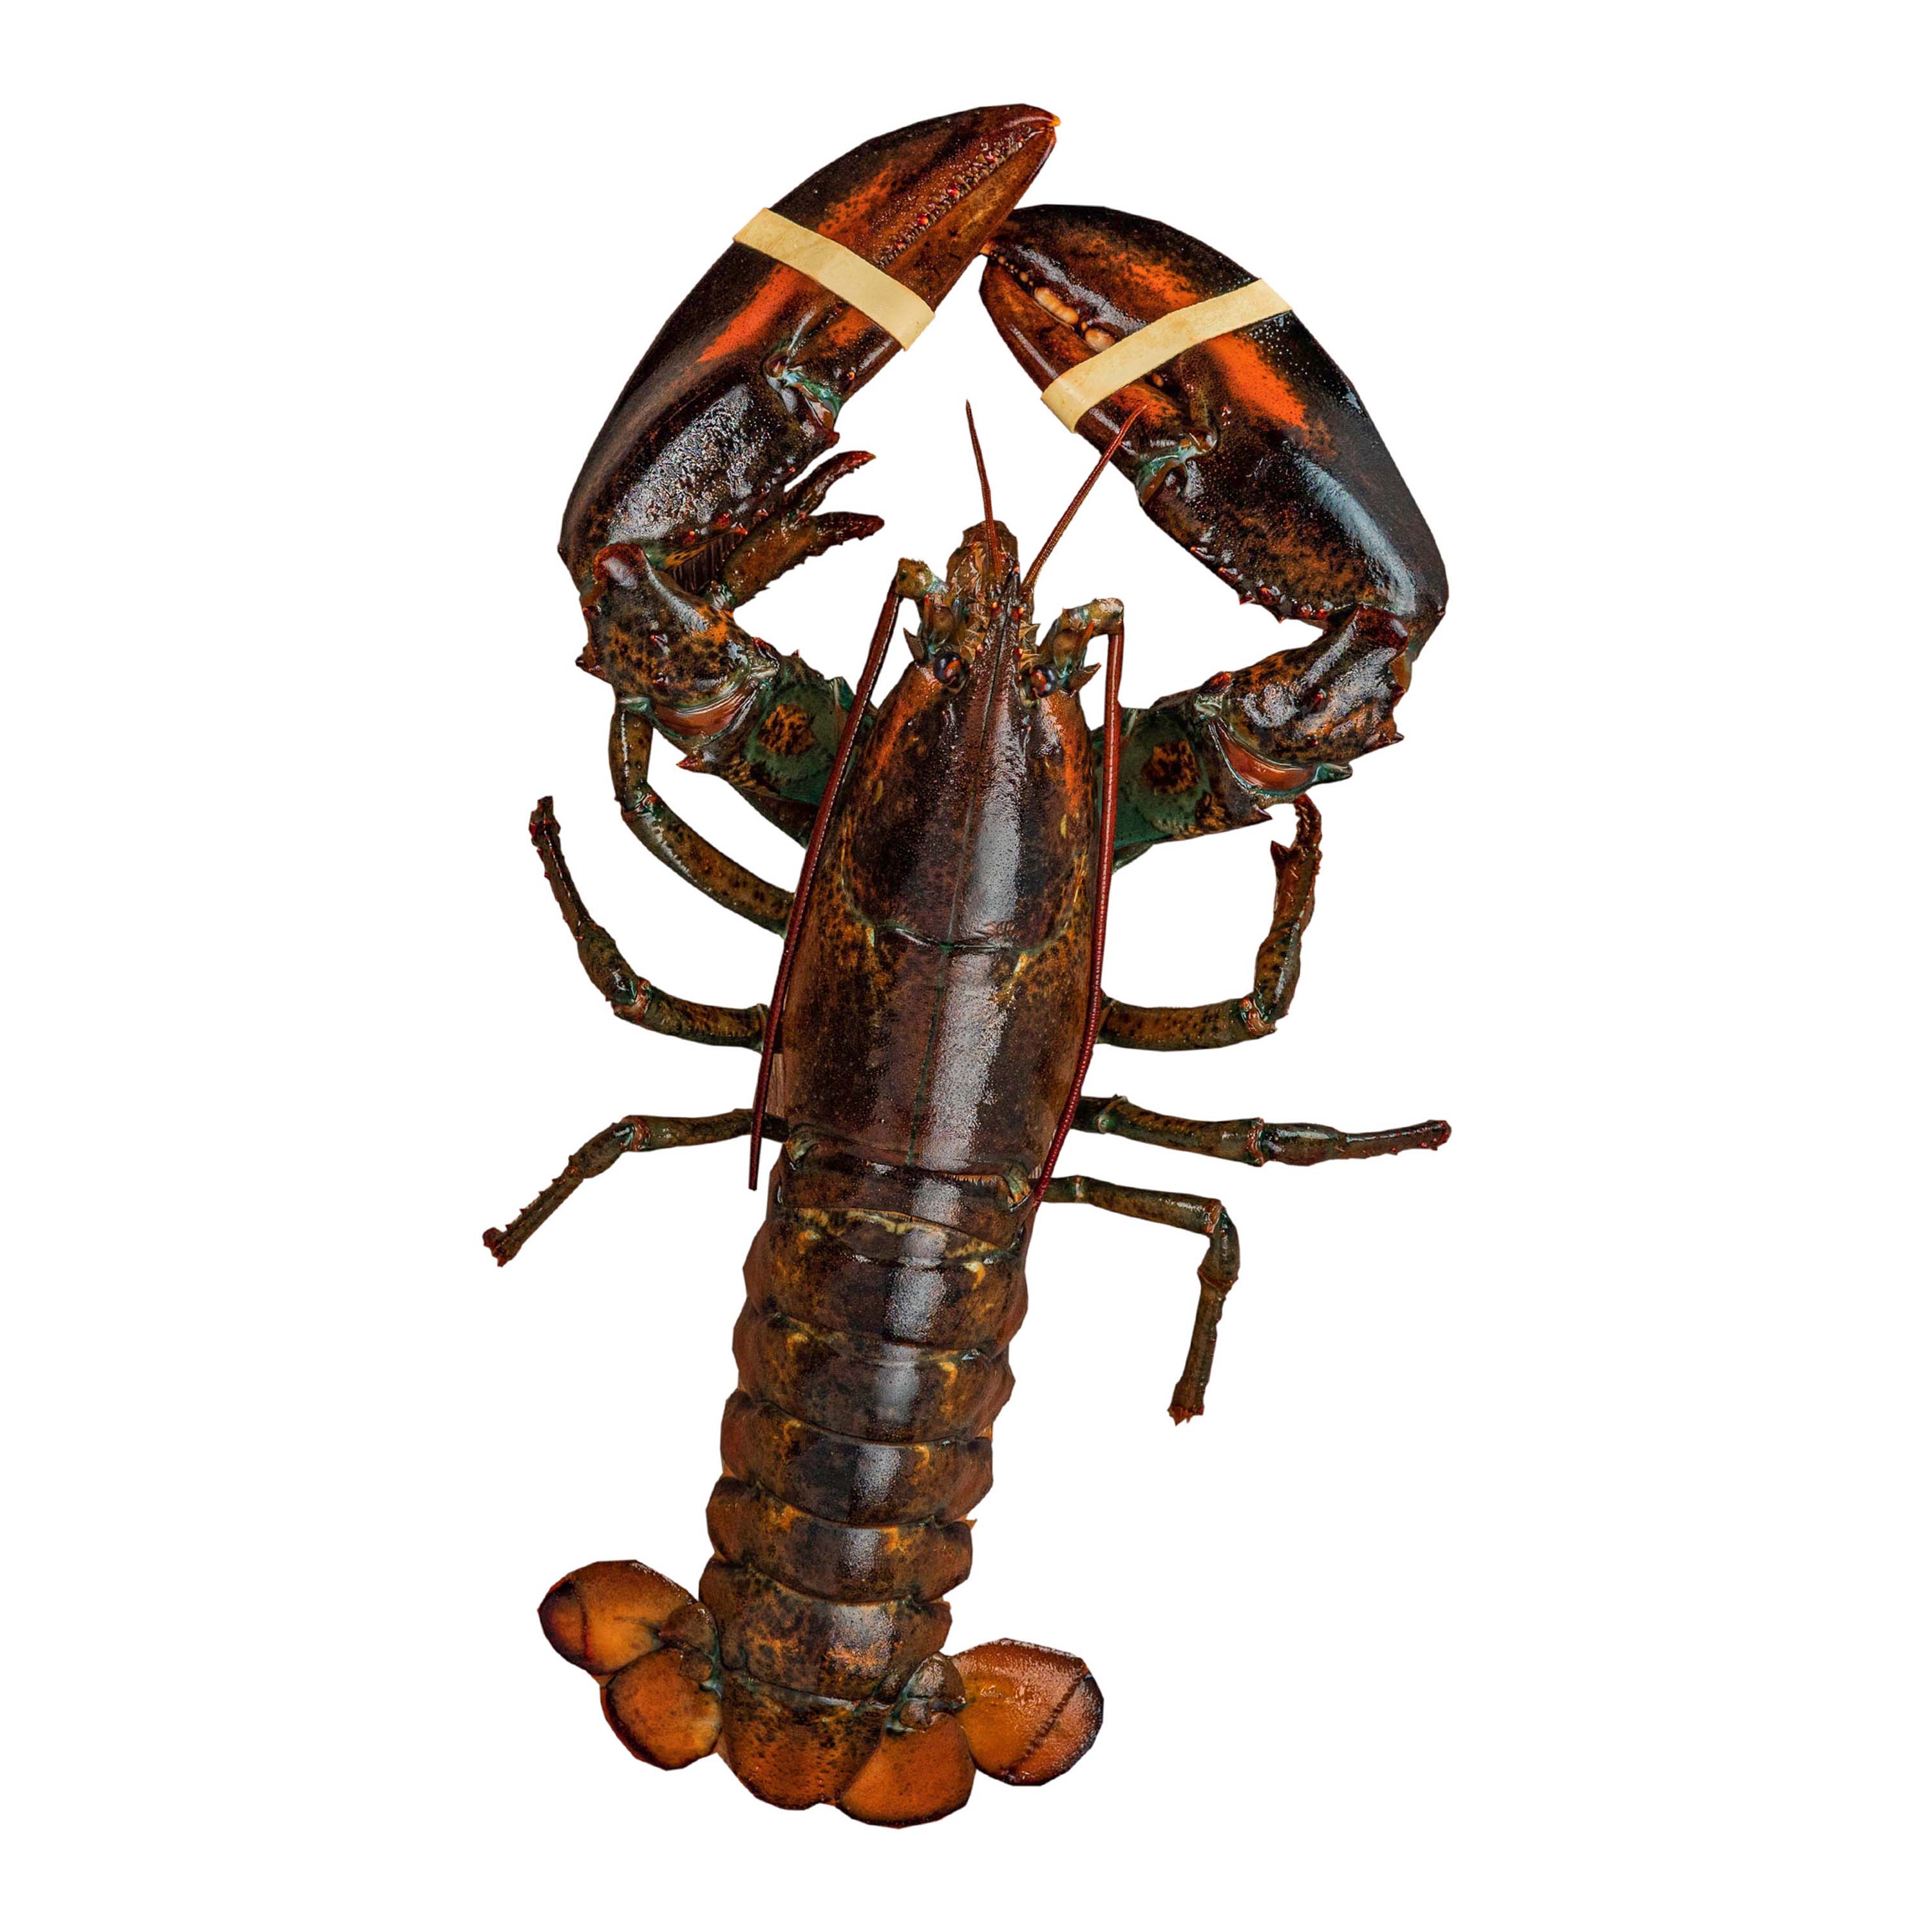 Live Maine Lobster (2 minimum)